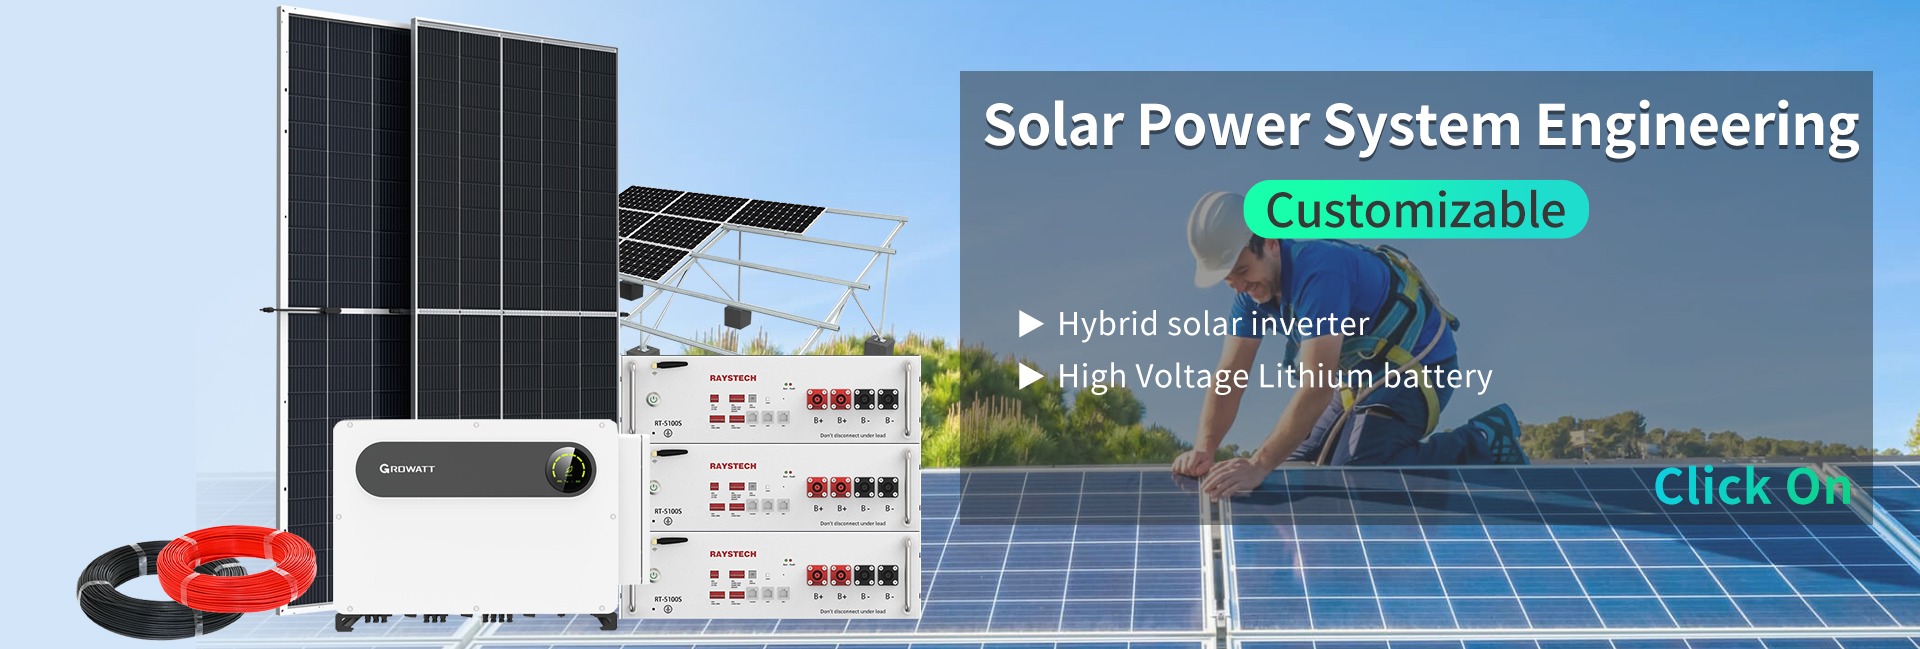 solar power system banner